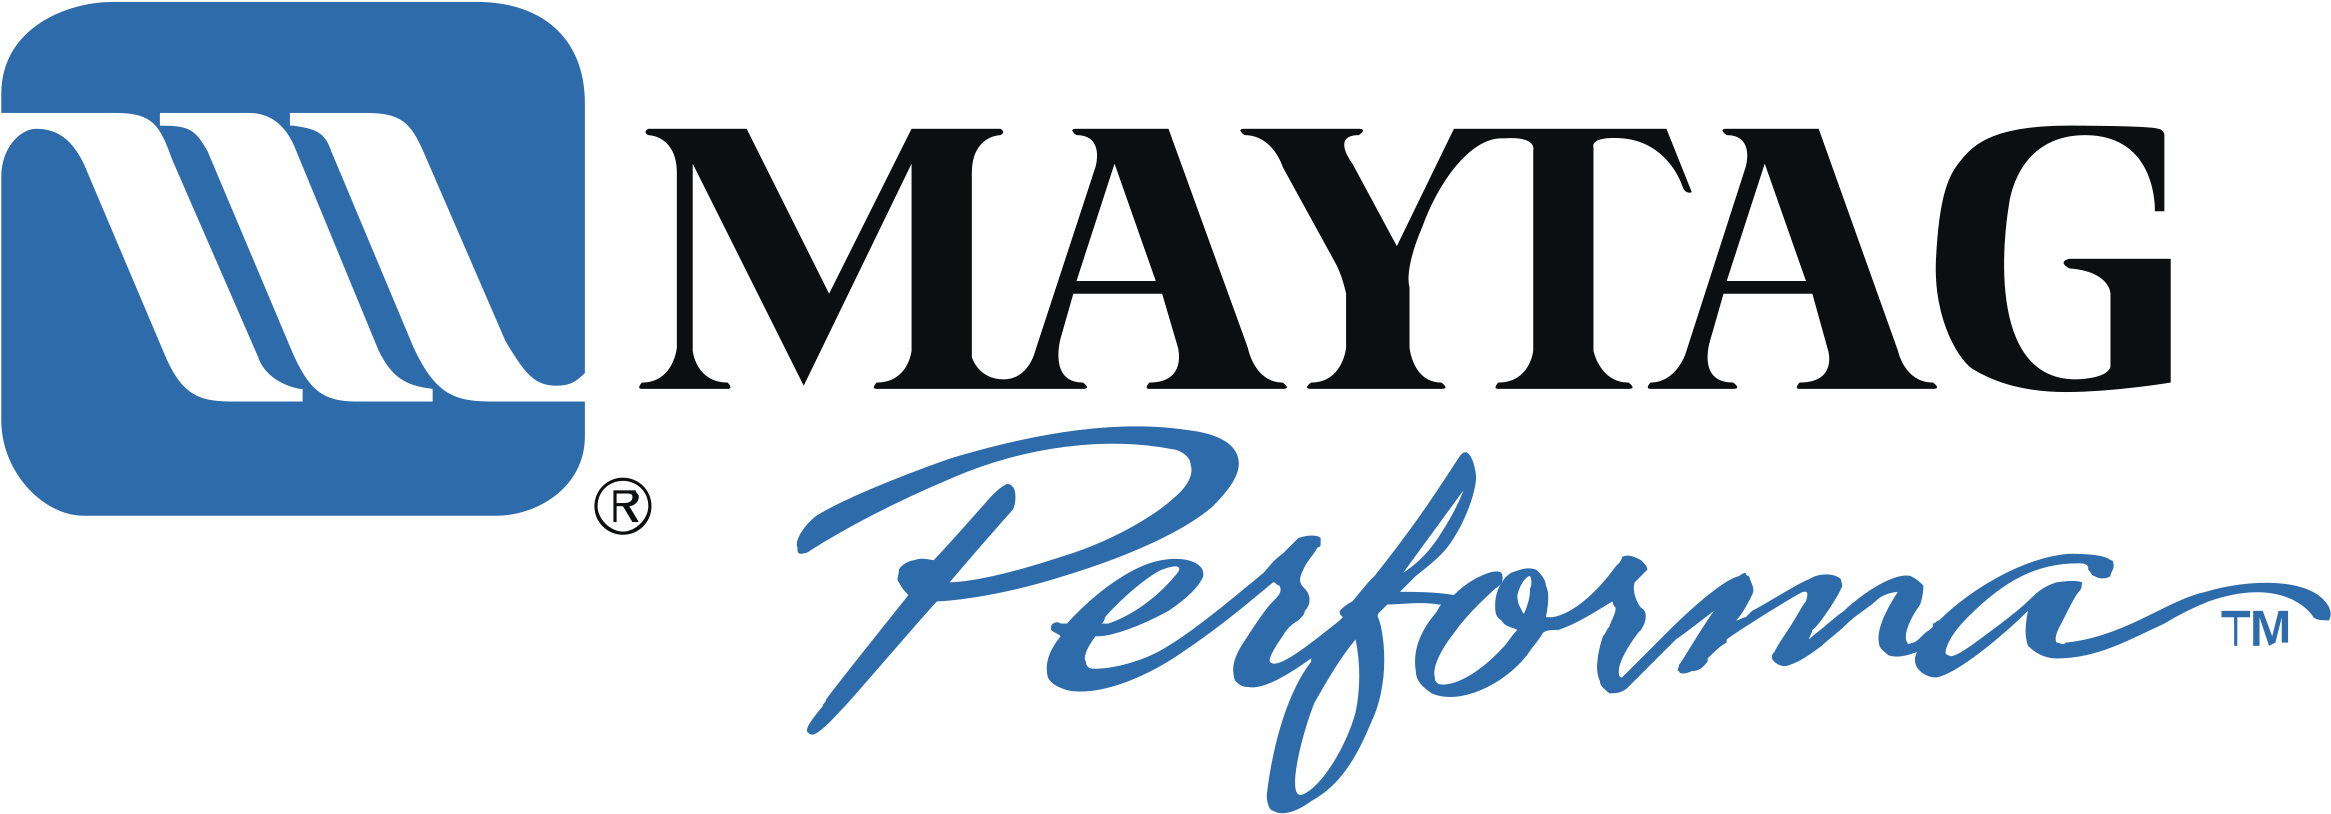 Matag Logo - Download Maytag Performa Logo Png Transparent PNG Image with No ...